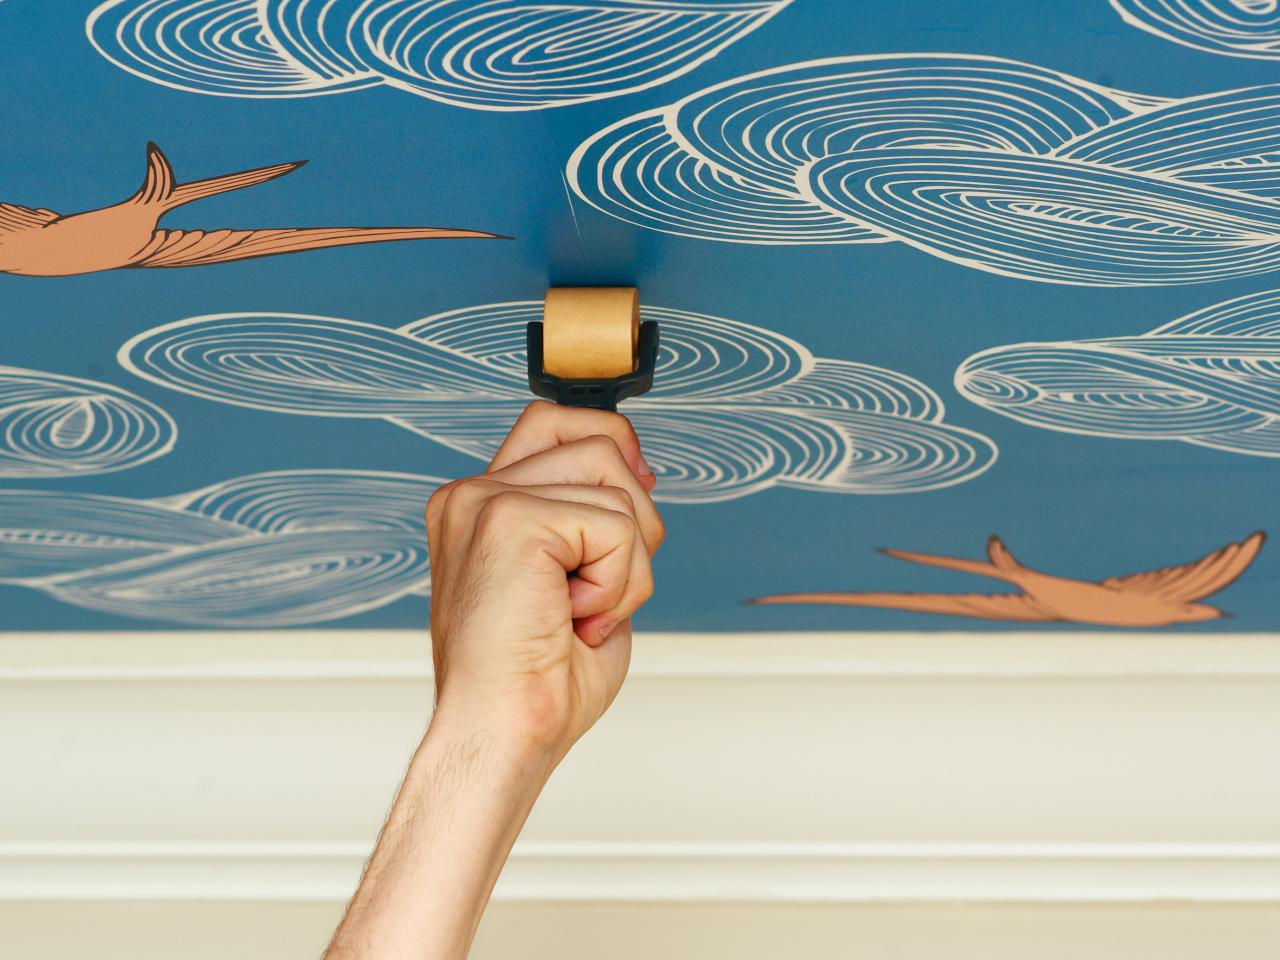 How to repair peeling wallpaper - The Washington Post